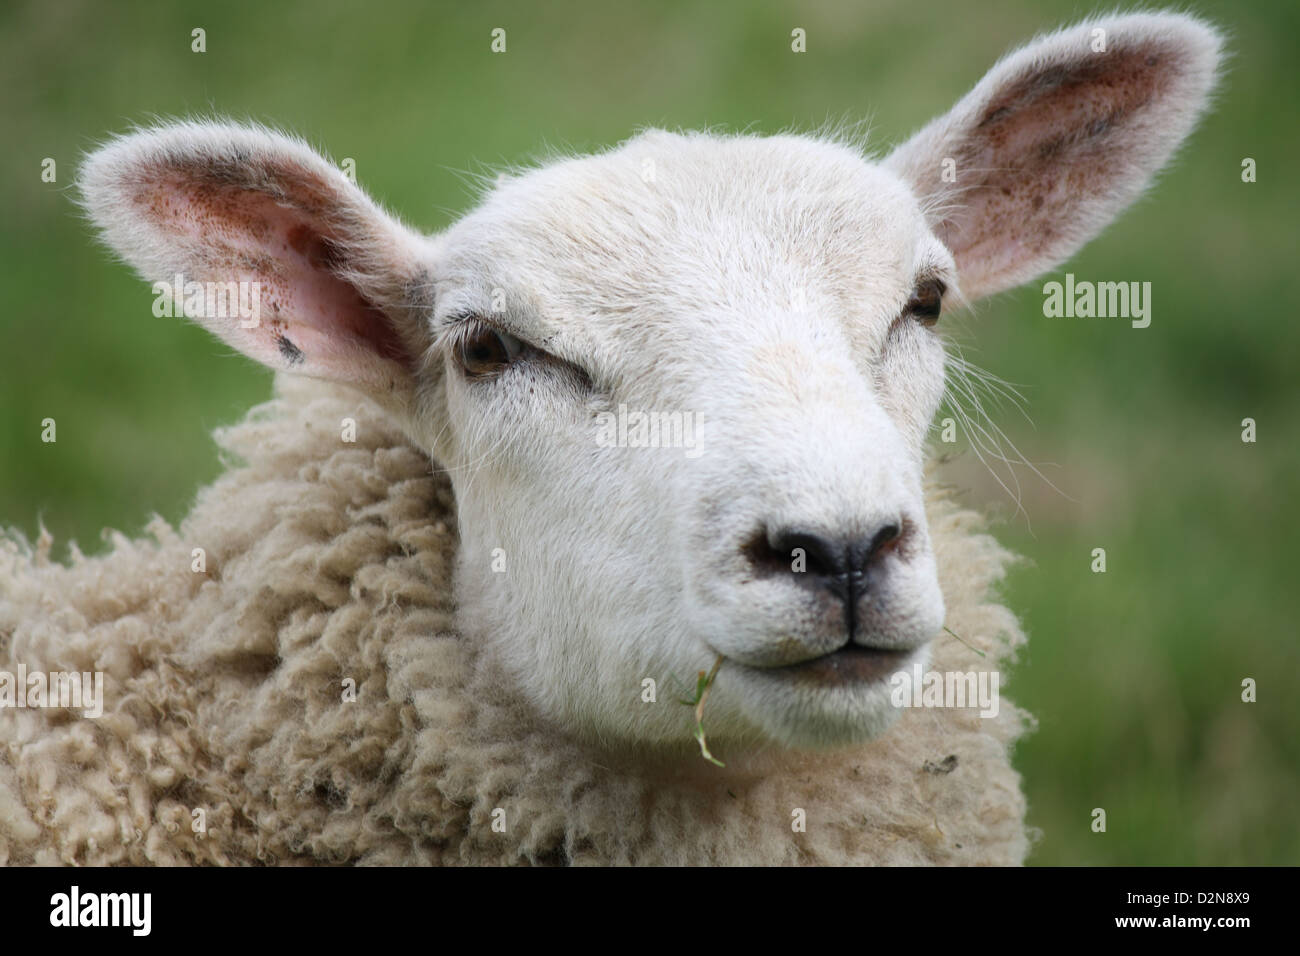 Three quarter portrait of a sheep Stock Photo